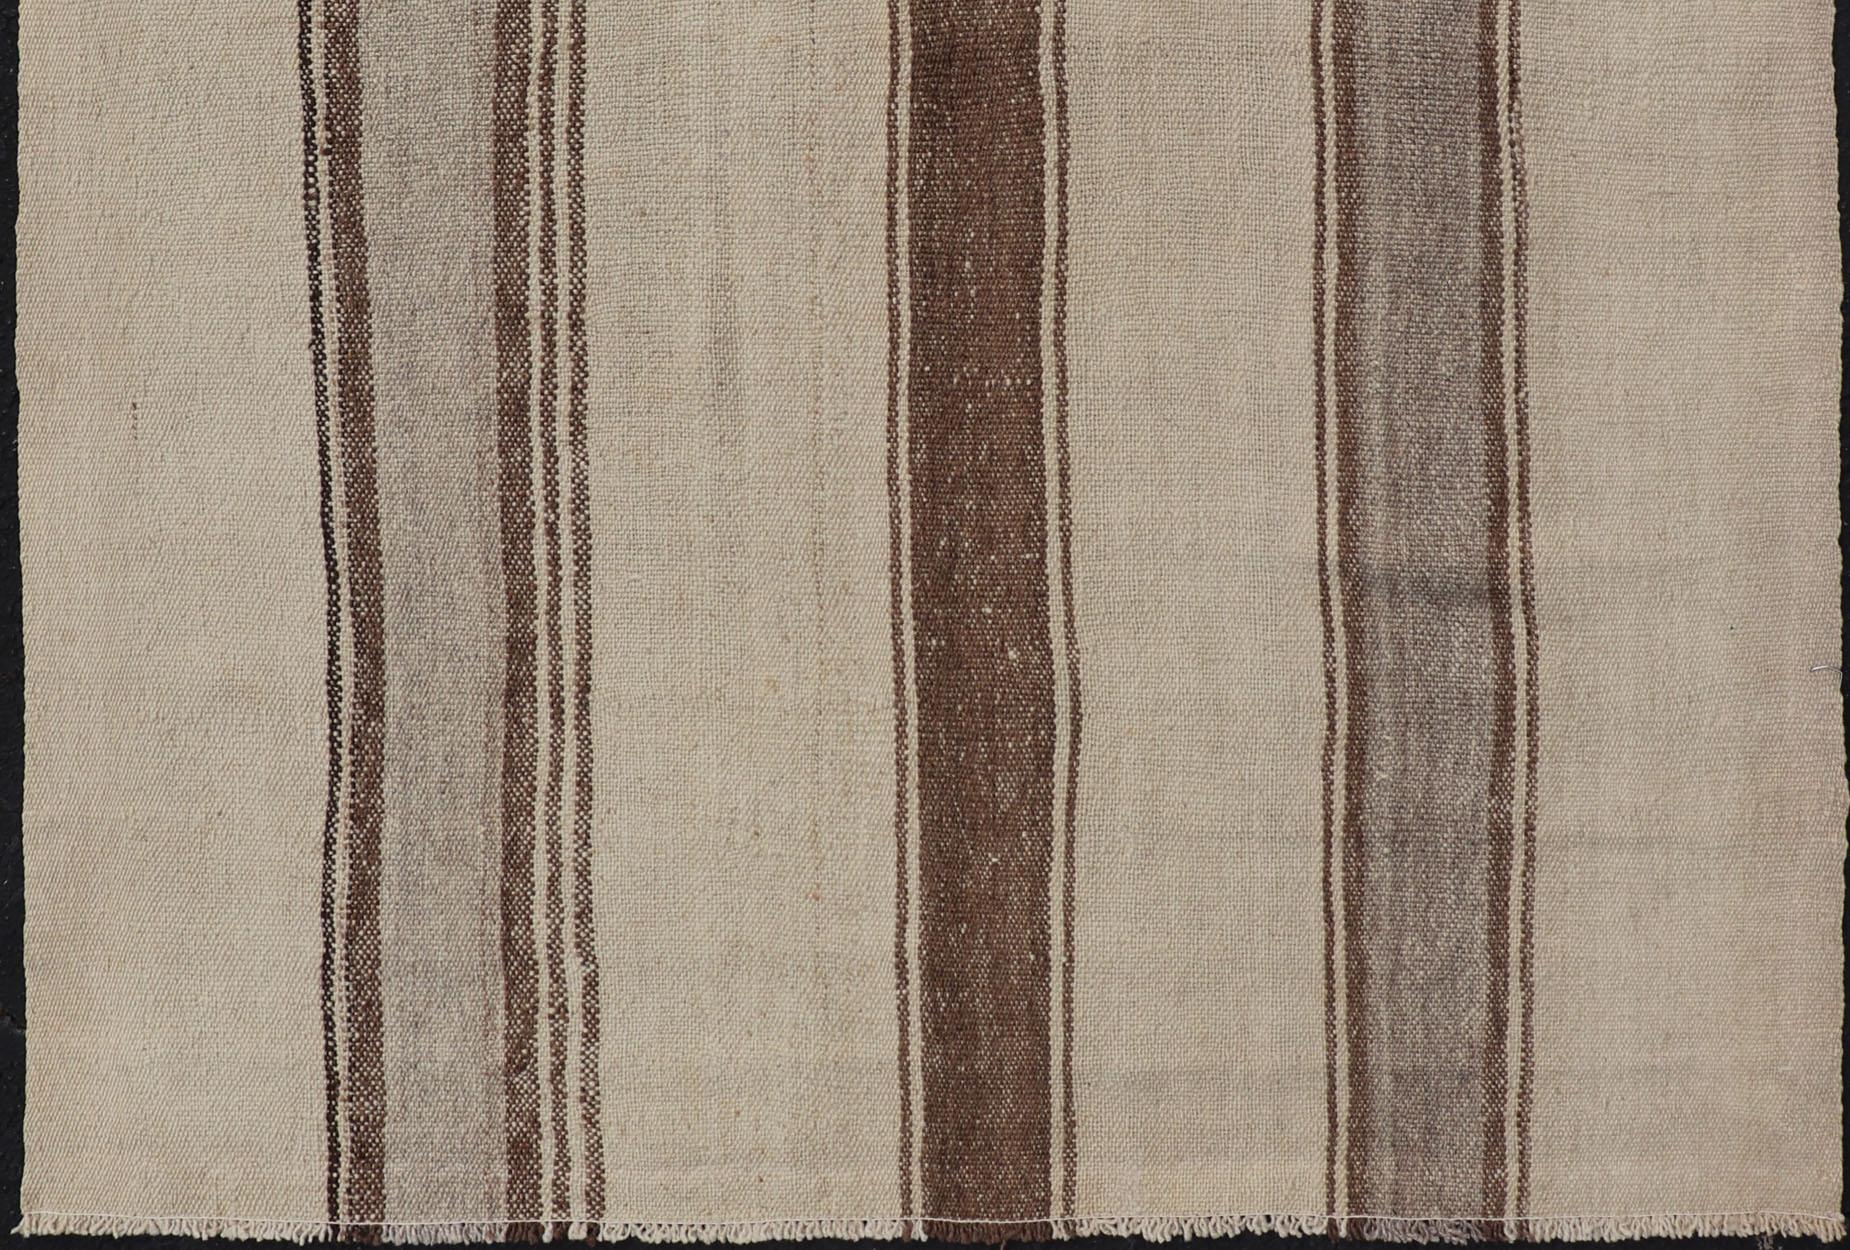 Vintage Kilim Turkish flat weave, Keivan Woven Arts rug EN-P13441 , country of origin / type: Turkey / Kilim, circa Mid-20th Century.

Measures: 4'3 x 5'10.